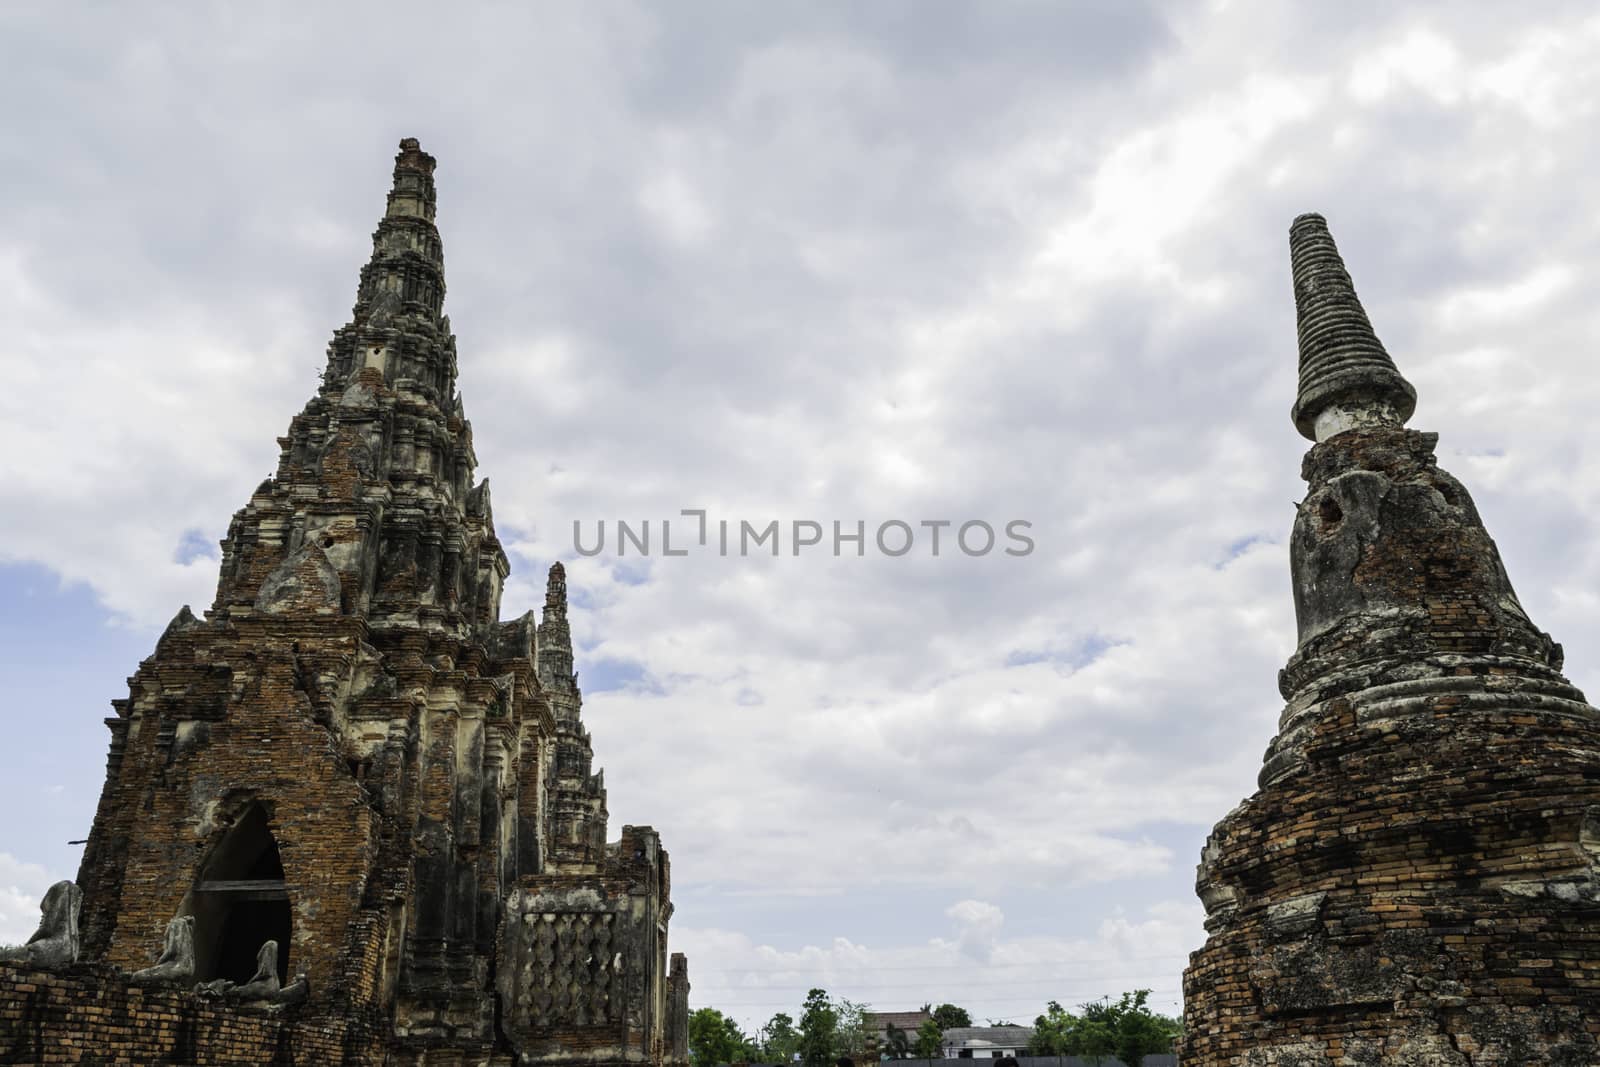 Old Beautiful Thai Temple Wat Chai Wattanaram, Ayutthaya Historical Park, Thailand